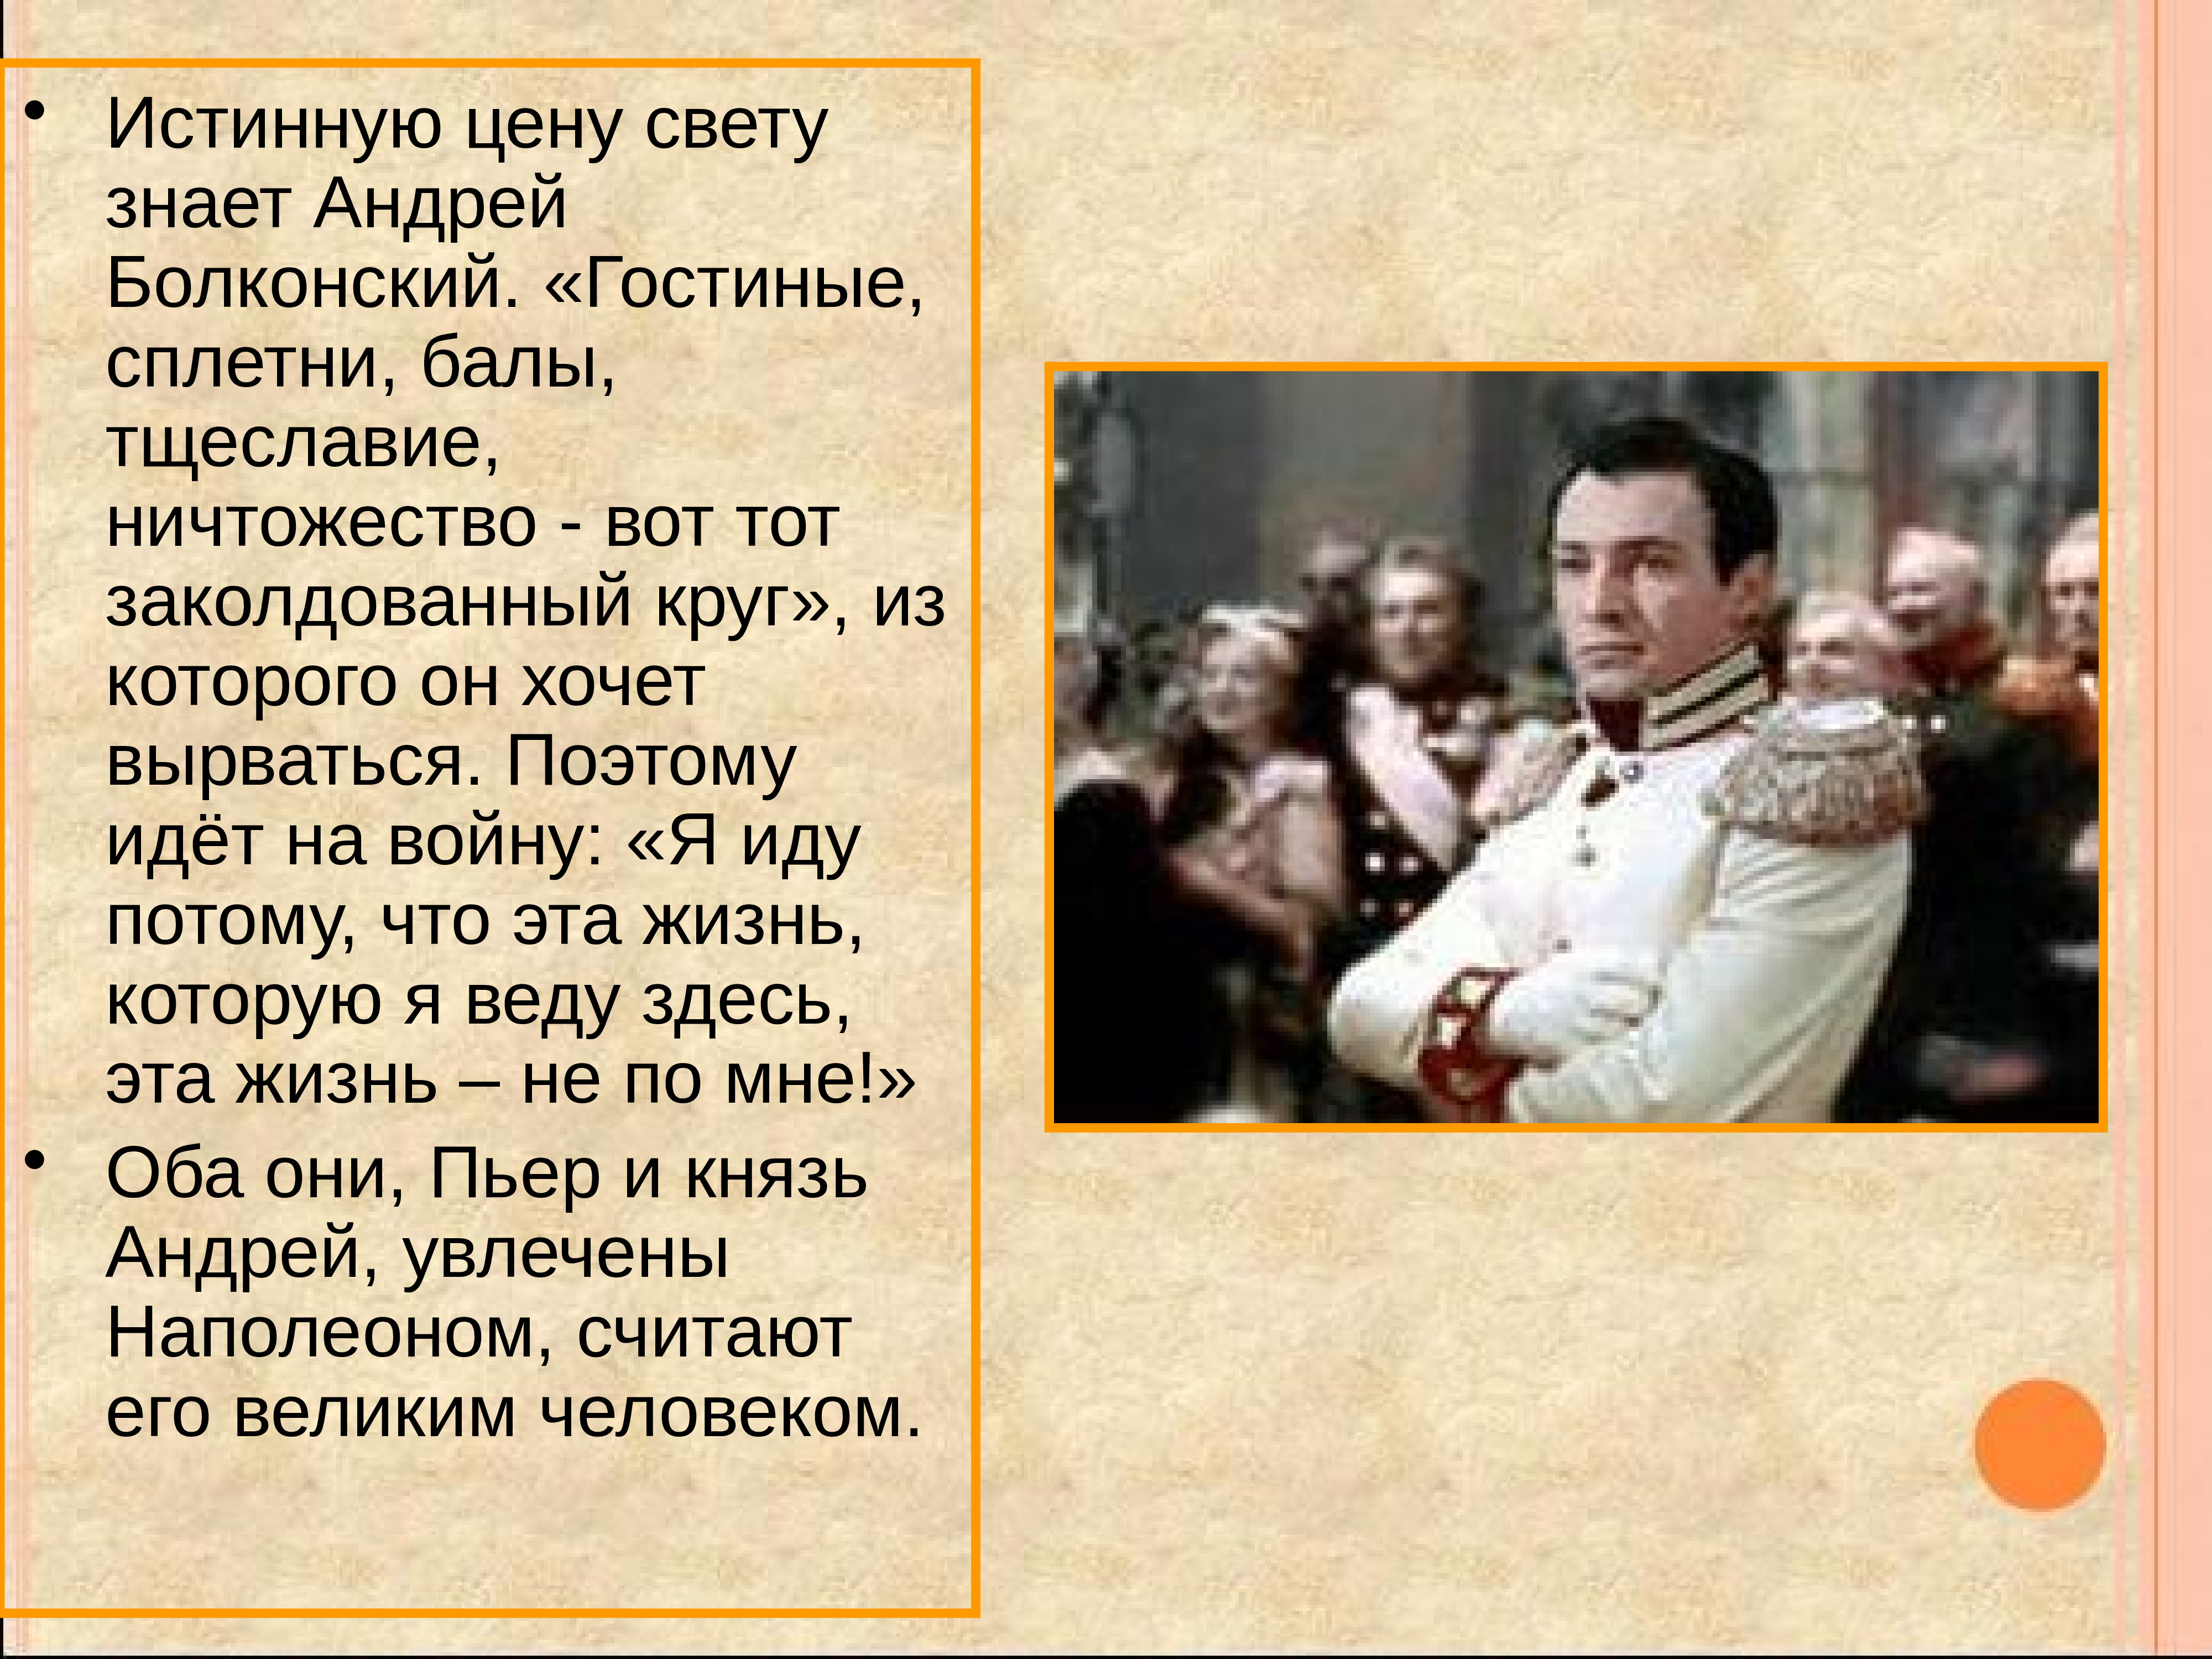 Характеристика князя Андрея Болконского